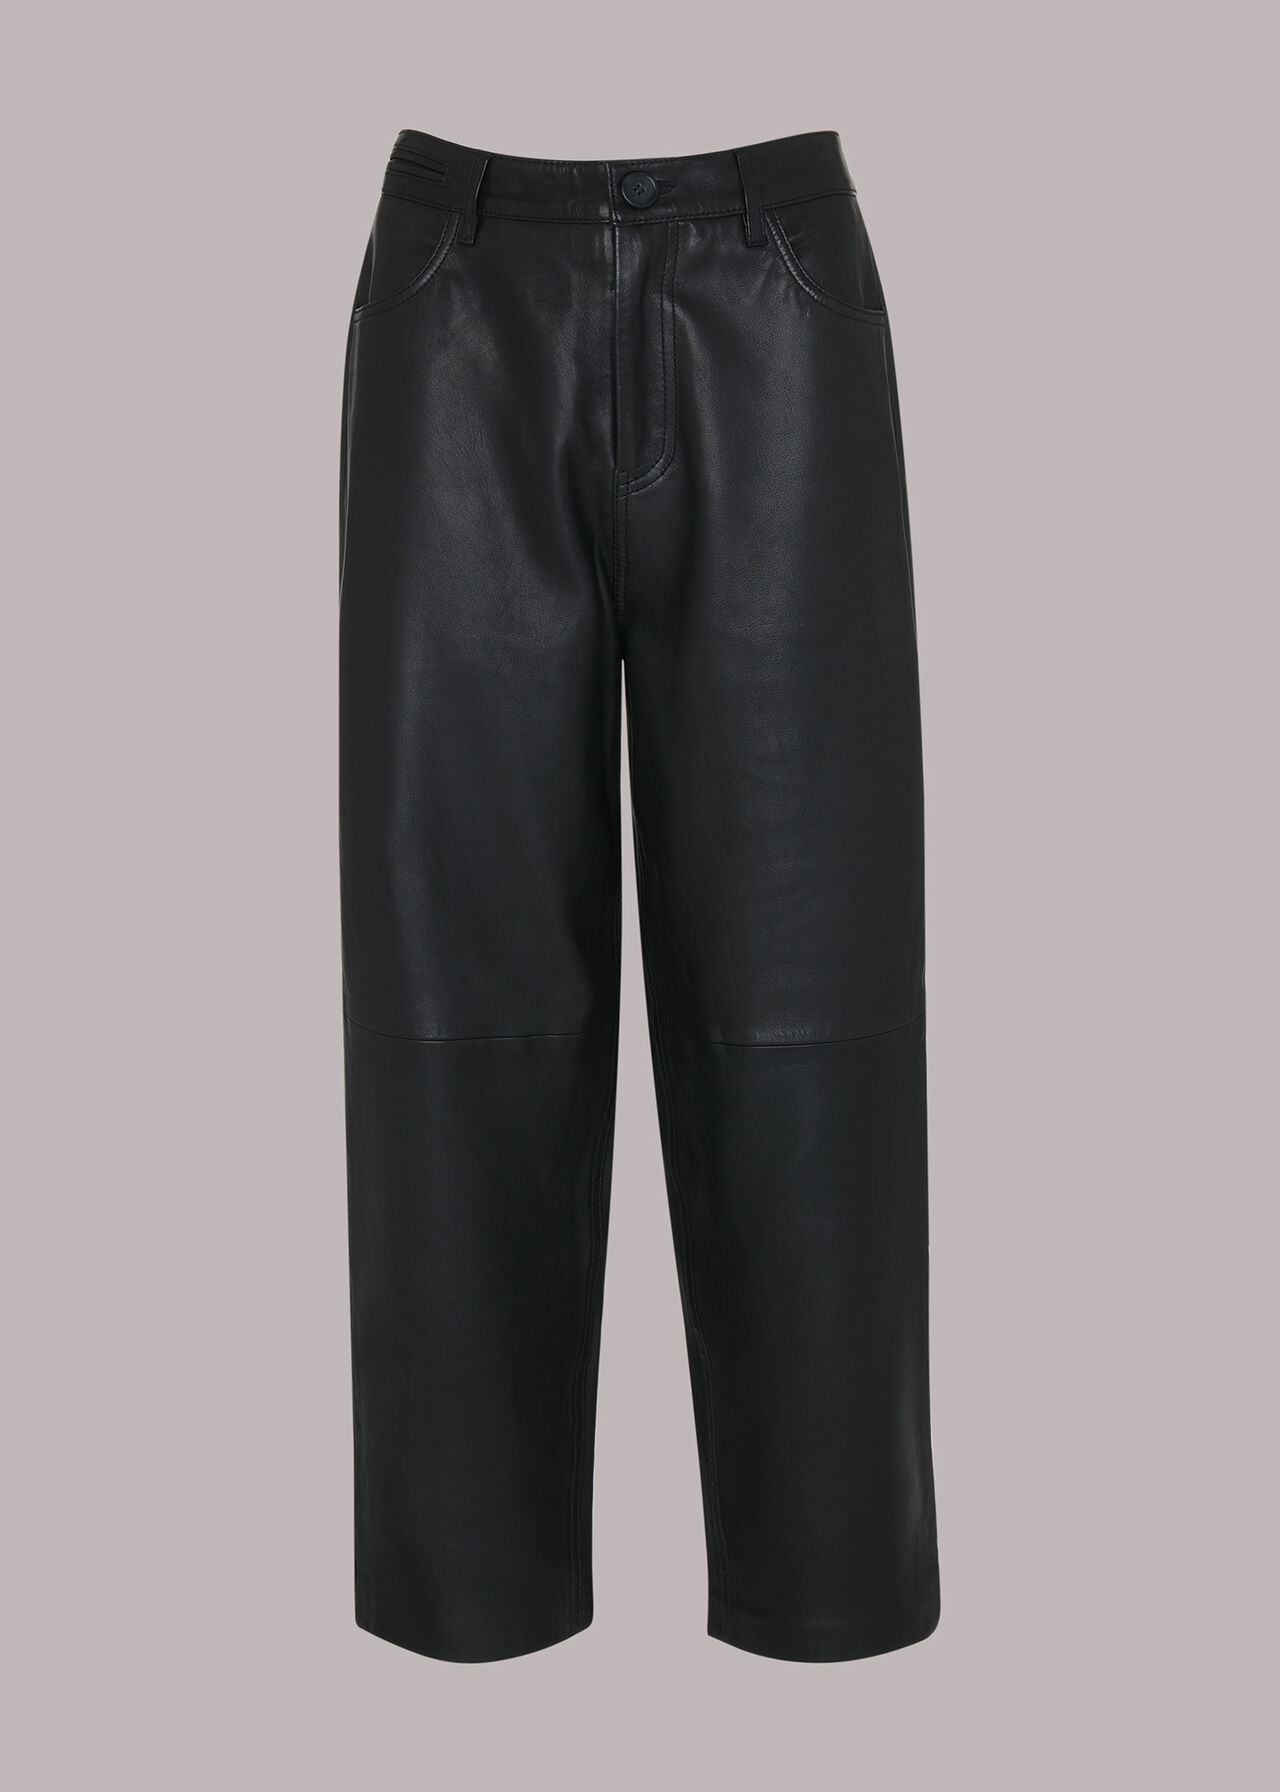 Black Leather Barrel Trouser, WHISTLES